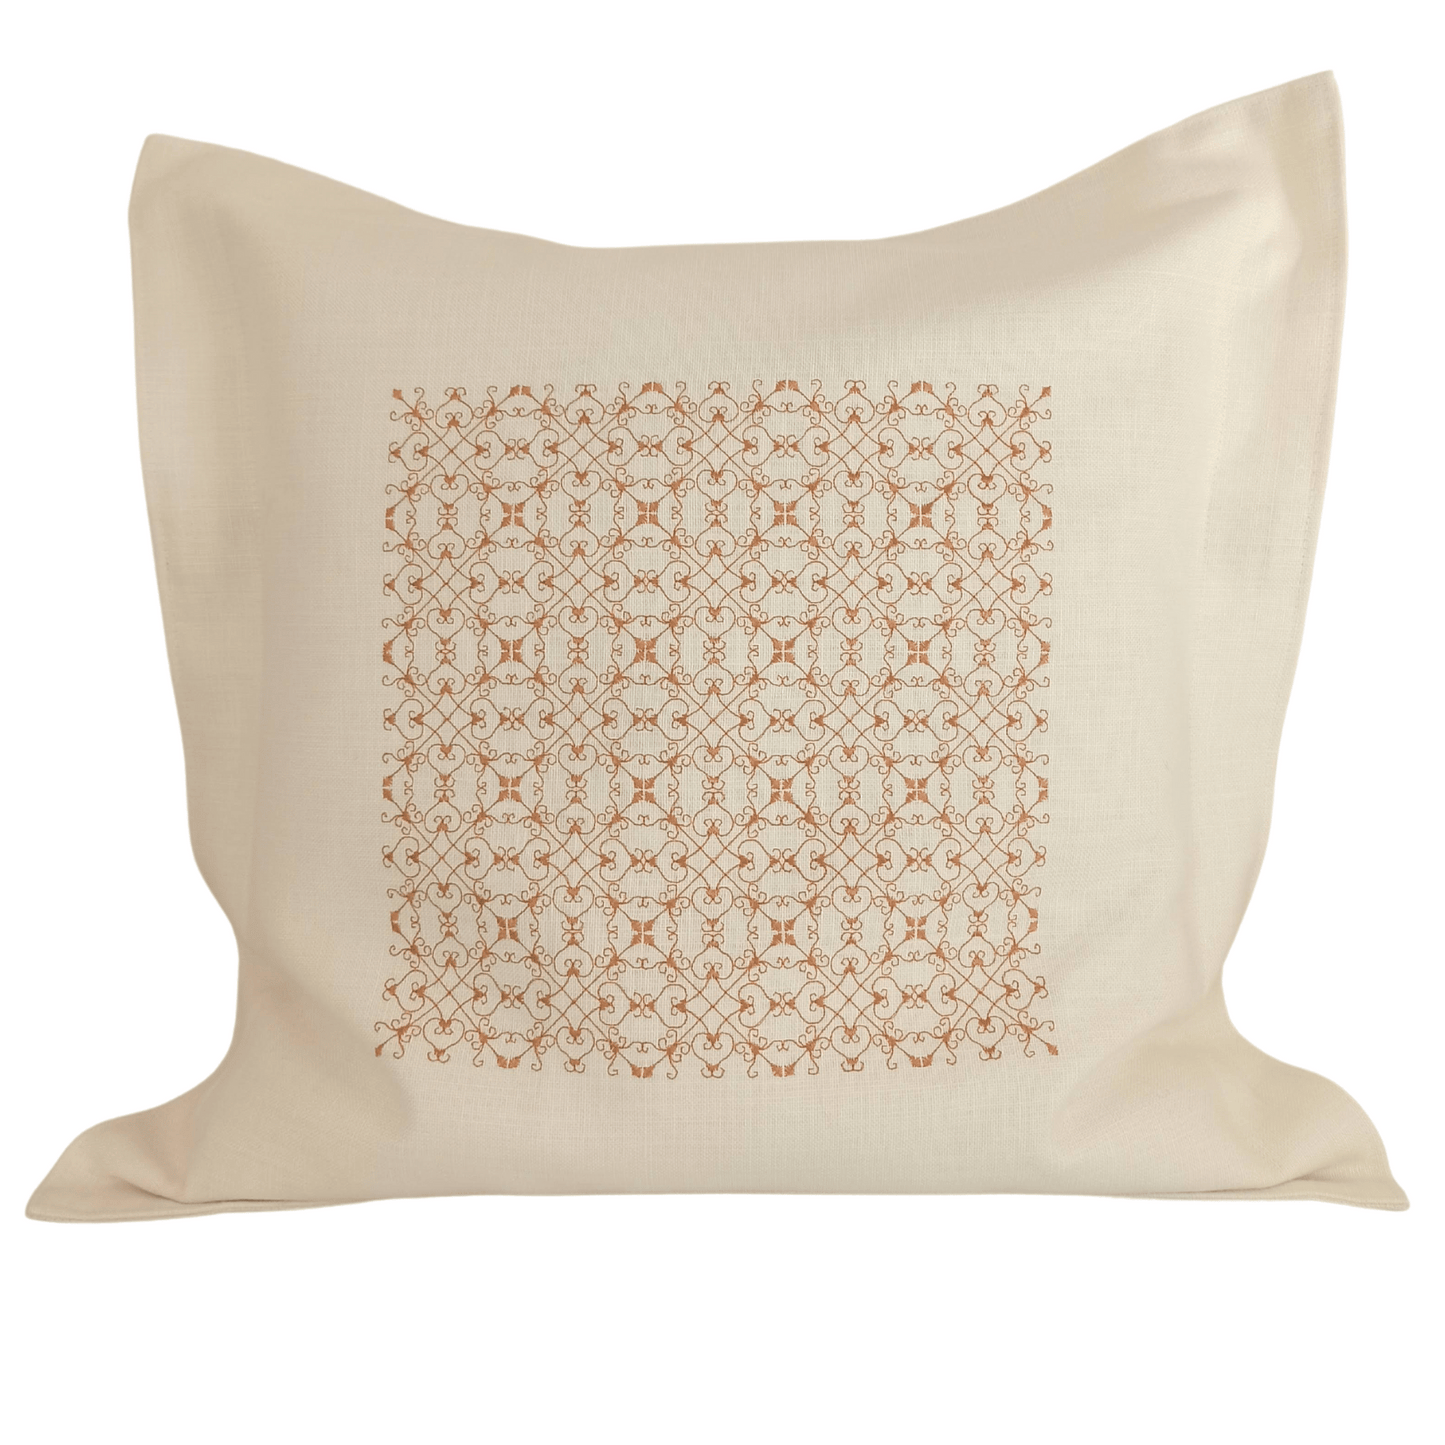 Linen Cushion Cover Portuguese Lace - Caramel - Front Image